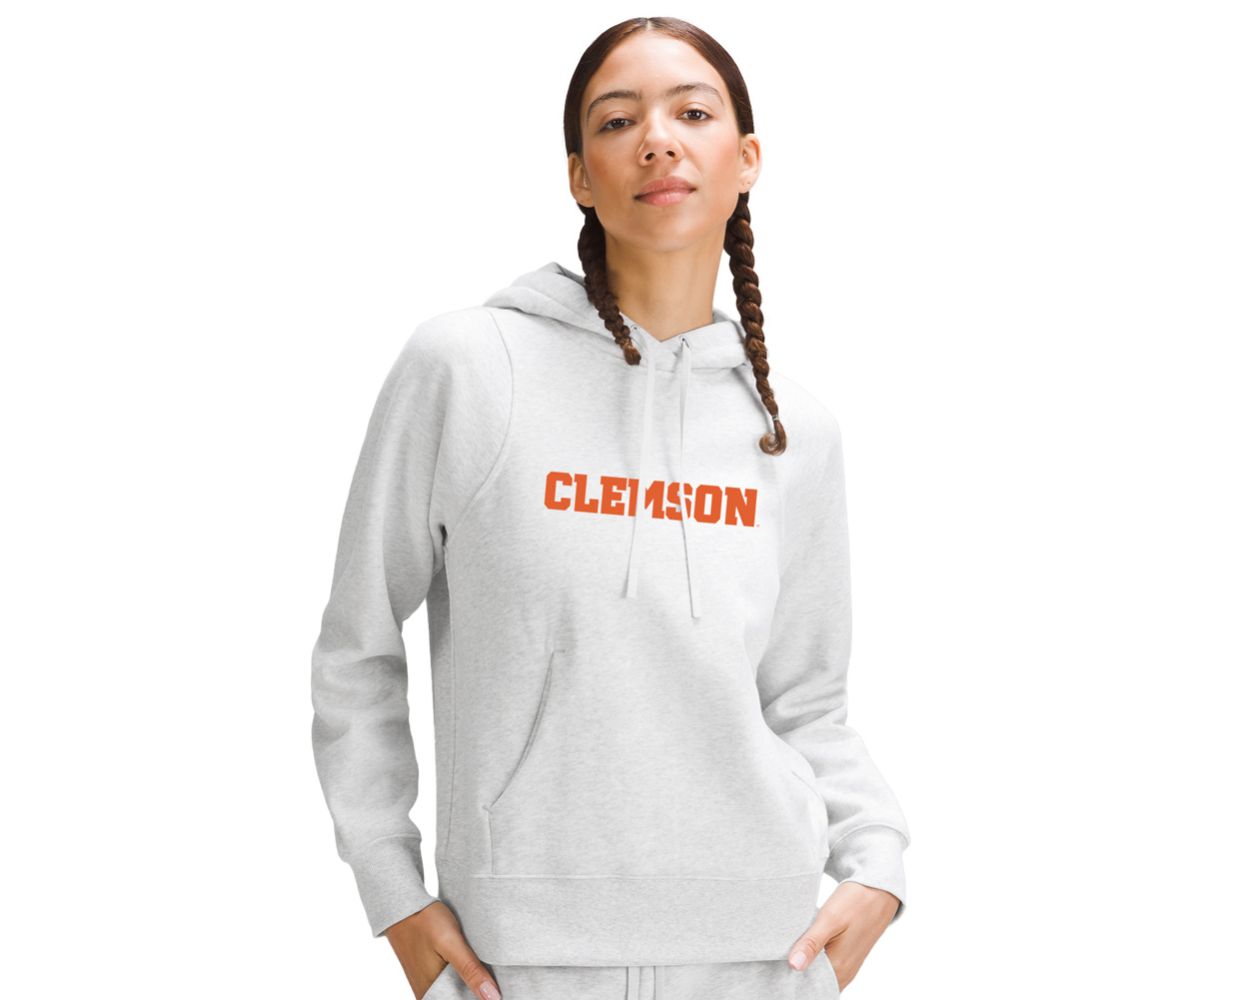 Clemson lululemon Women's Relaxed-Fit Fleece Hoodie